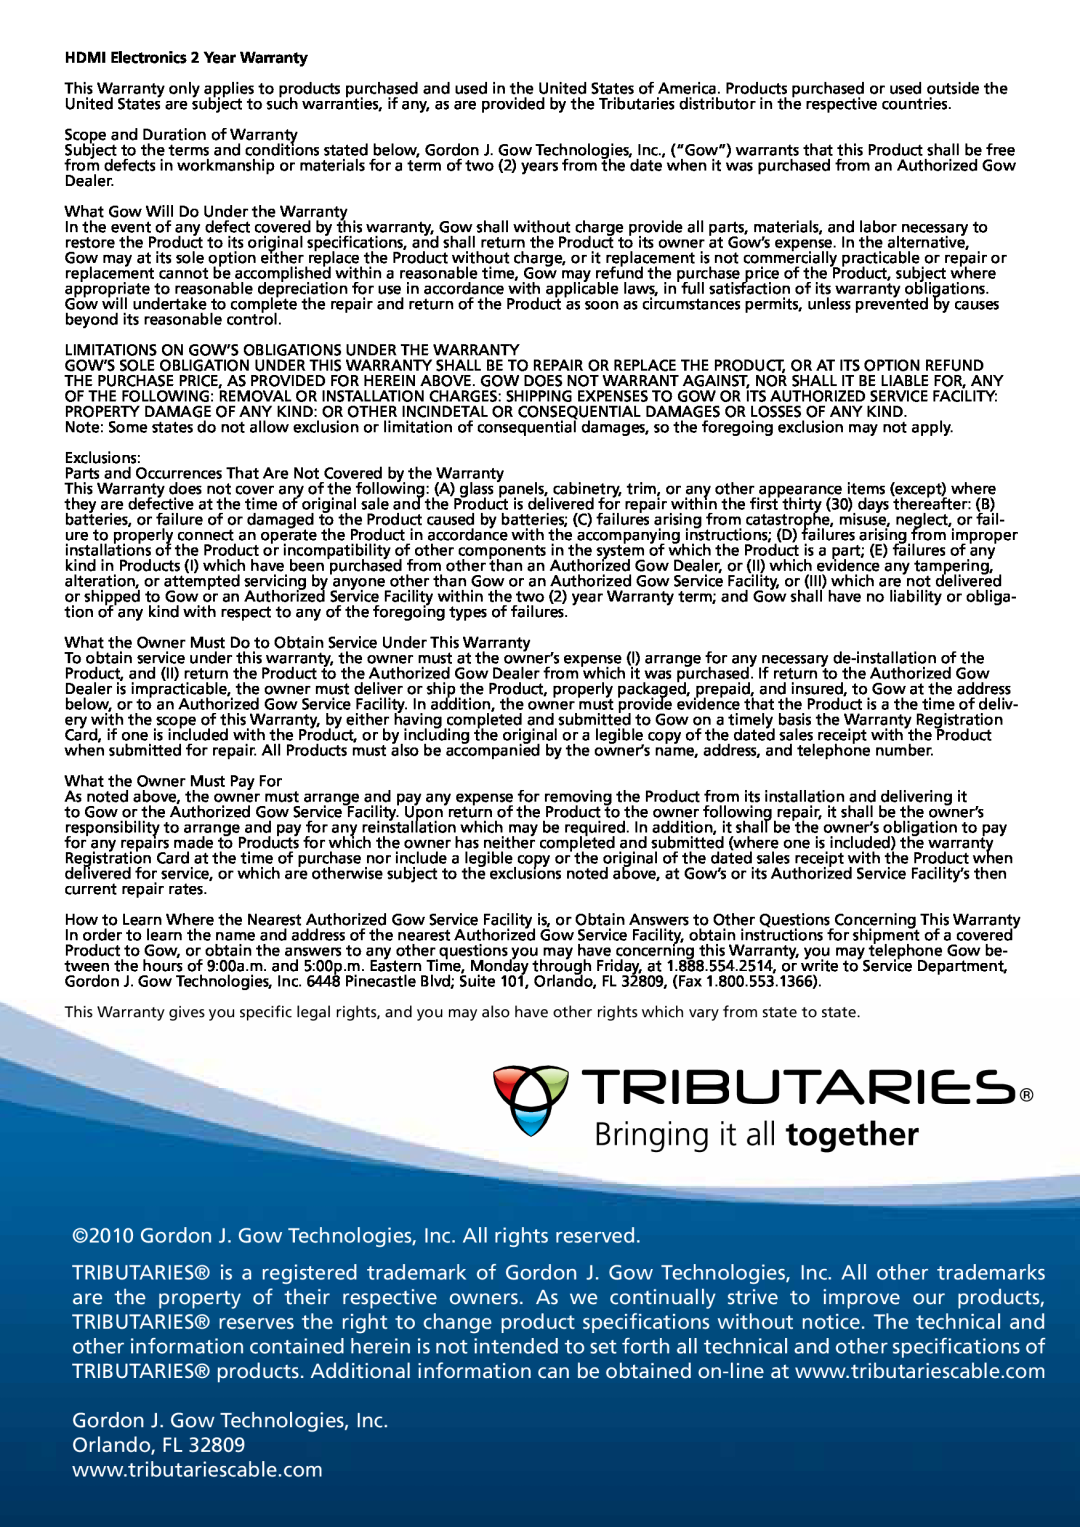 Tributaries HX1C6-PRO Gordon J. Gow Technologies, Inc. All rights reserved, Gordon J. Gow Technologies, Inc Orlando, FL 